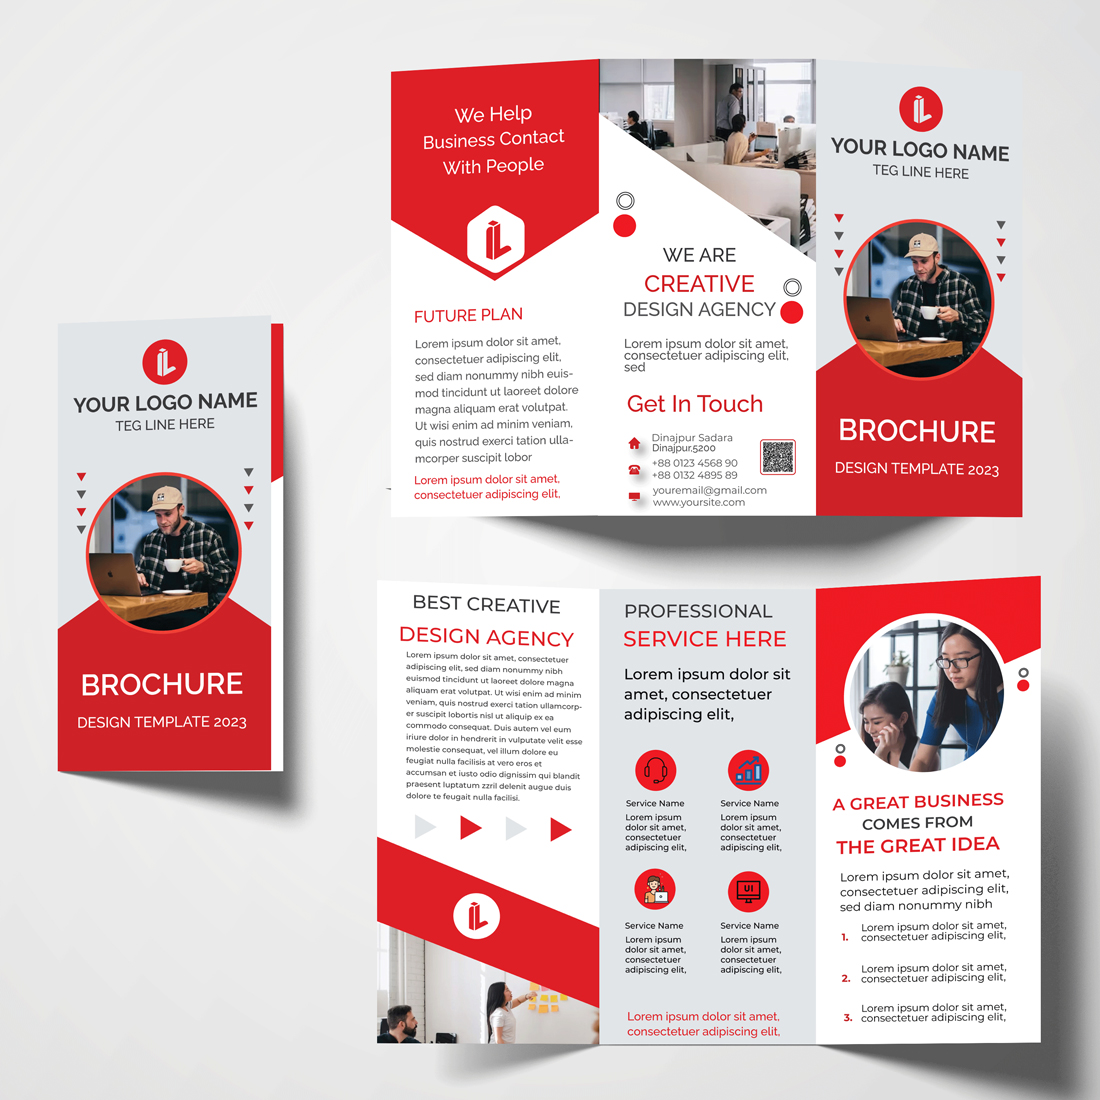 tri fold brochure design templates